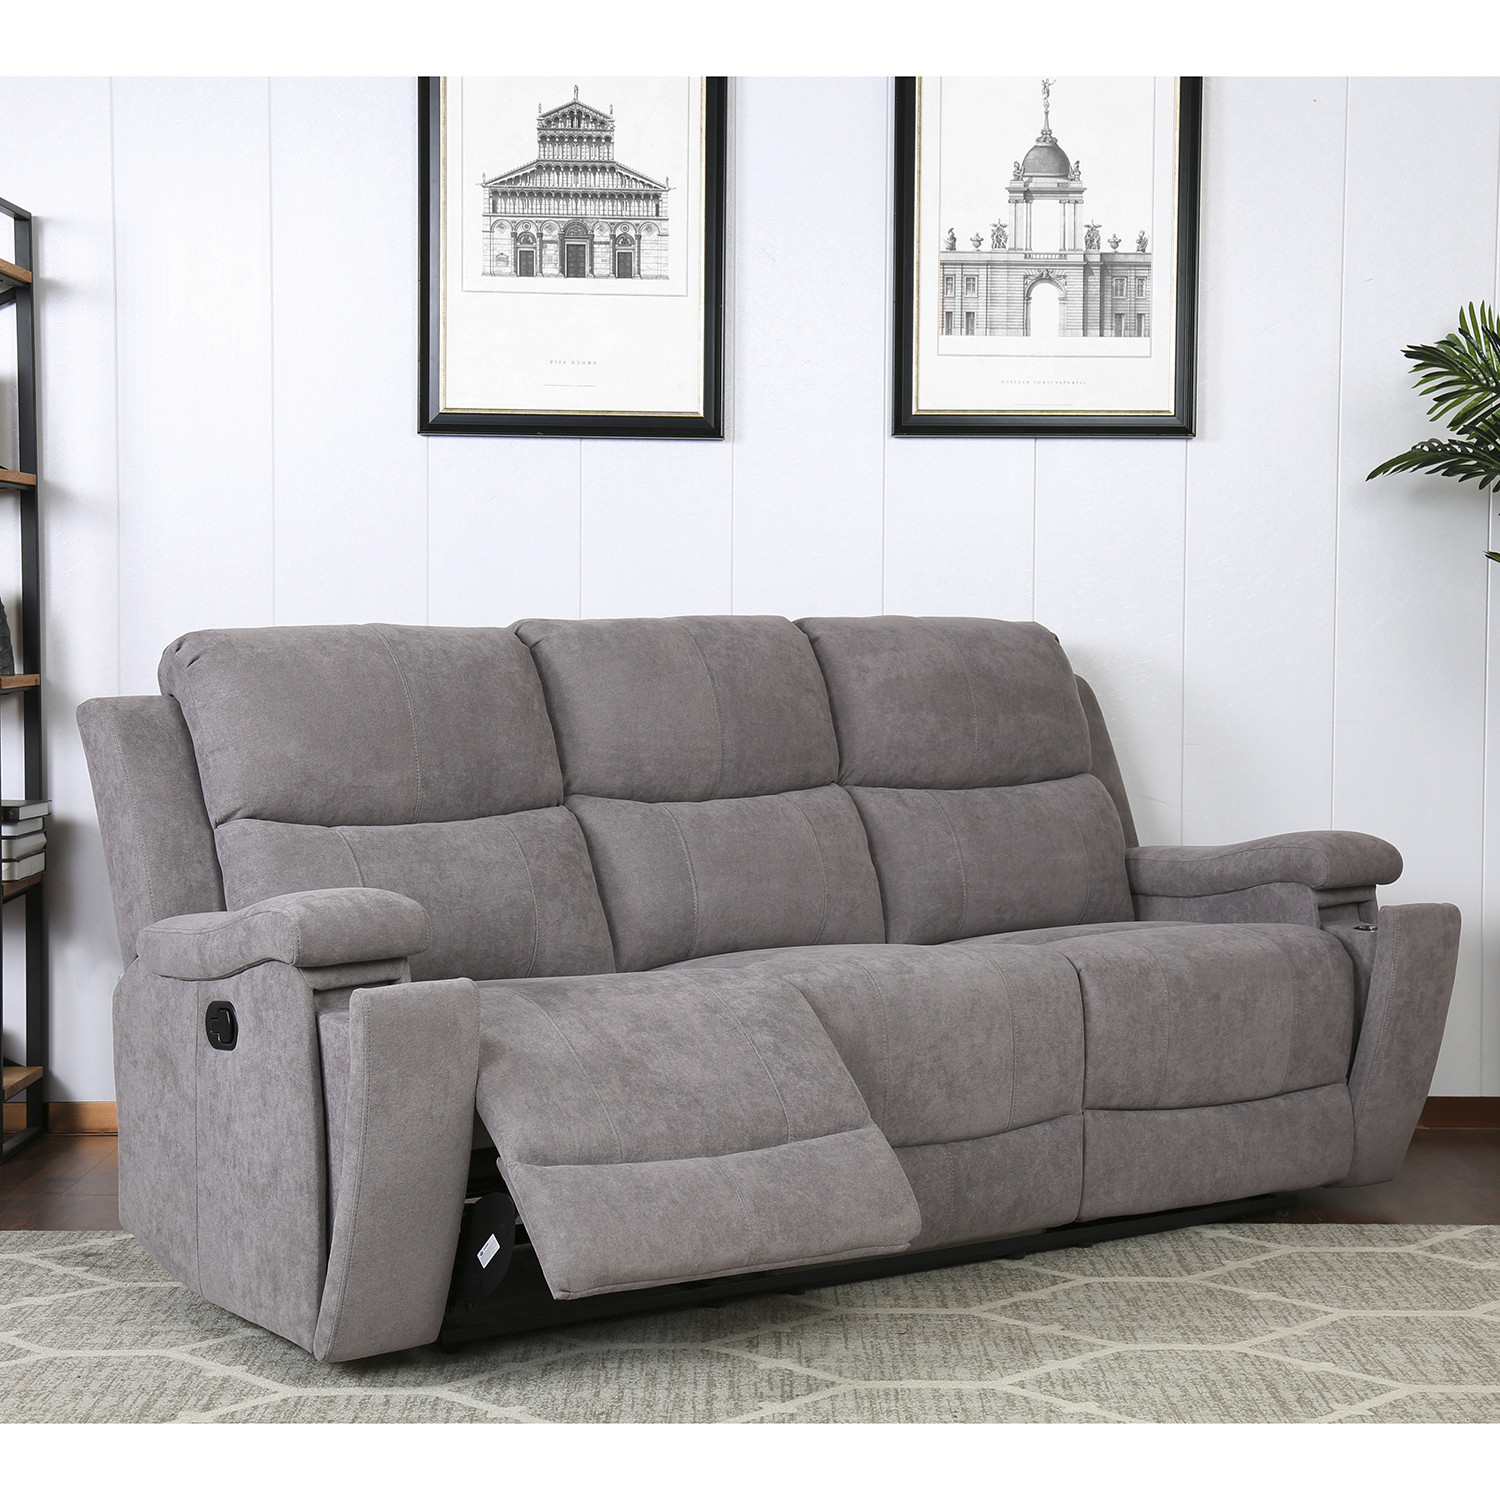 Ledbury 3 Seater Grey Fabric Manual Recliner Sofa Image 4